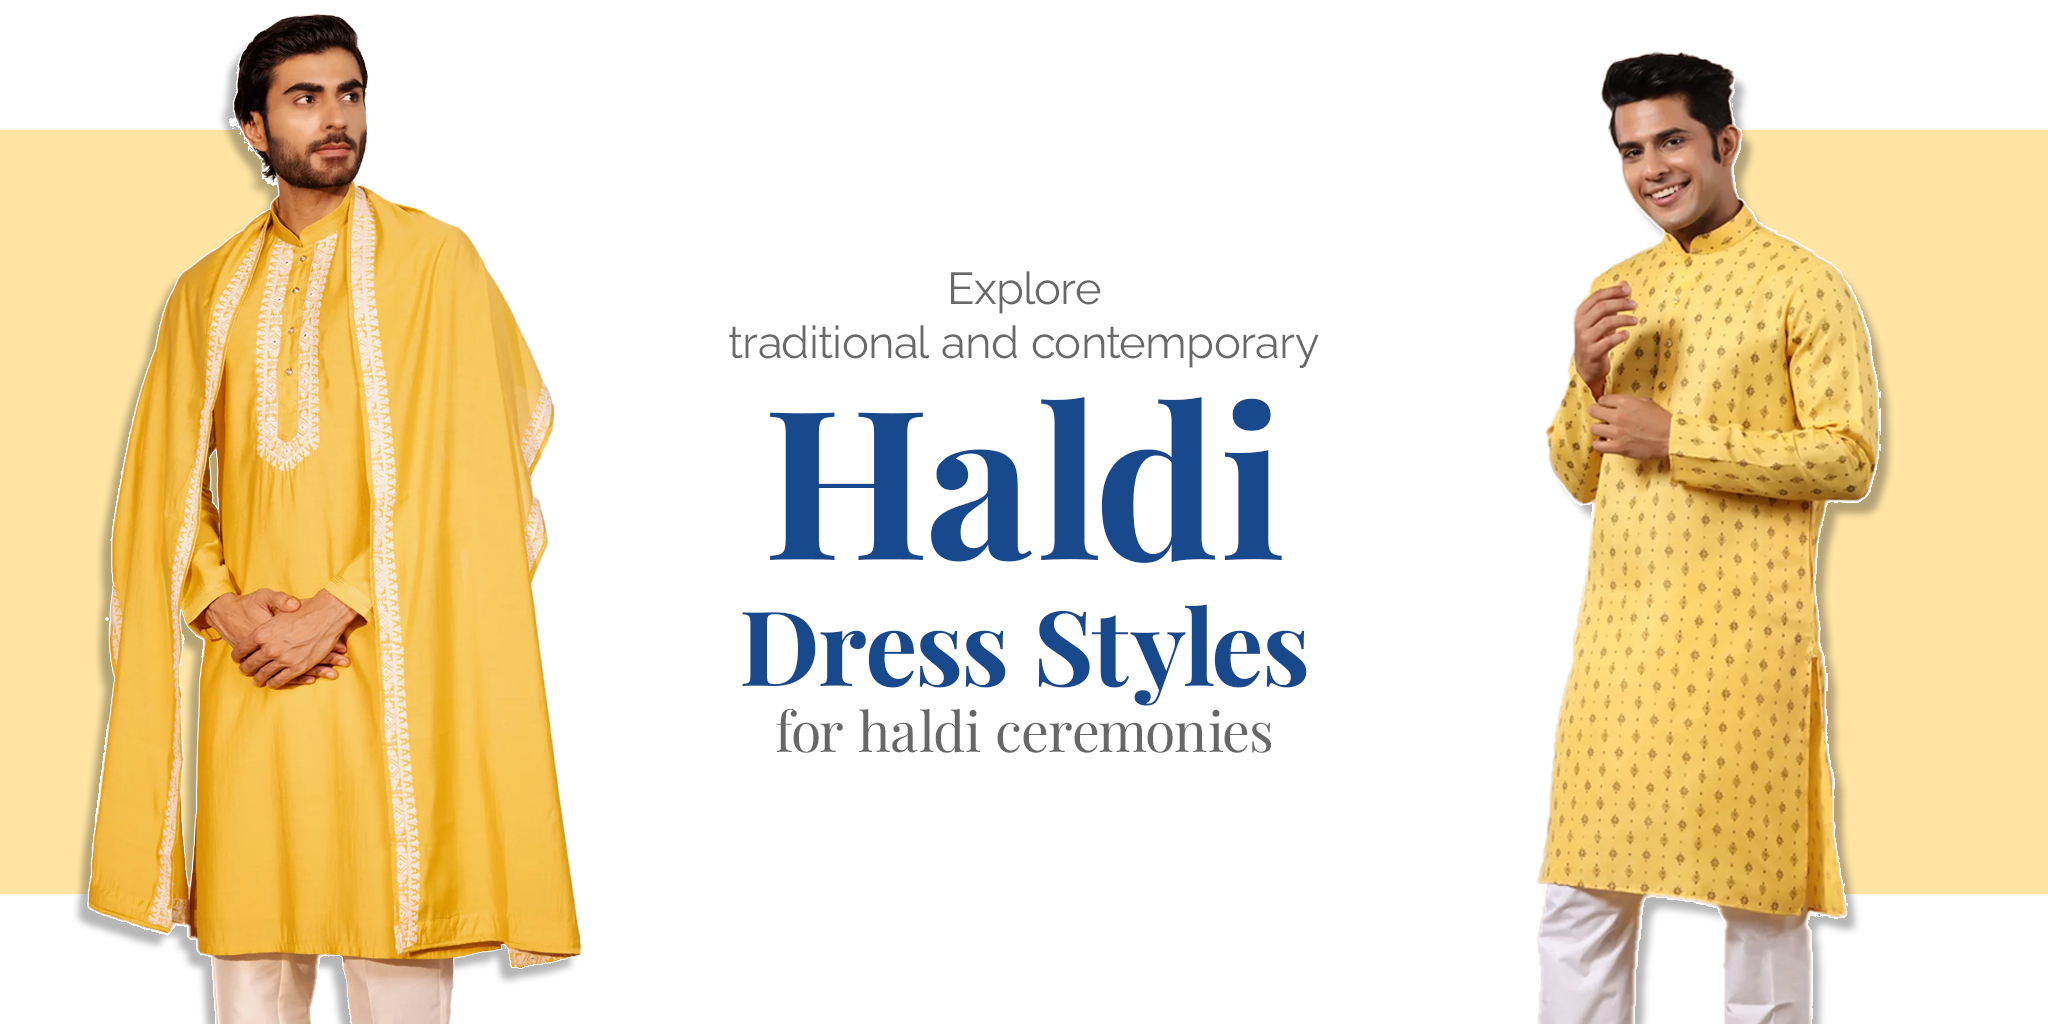 Explore traditional and contemporary haldi dress styles for haldi ceremonies